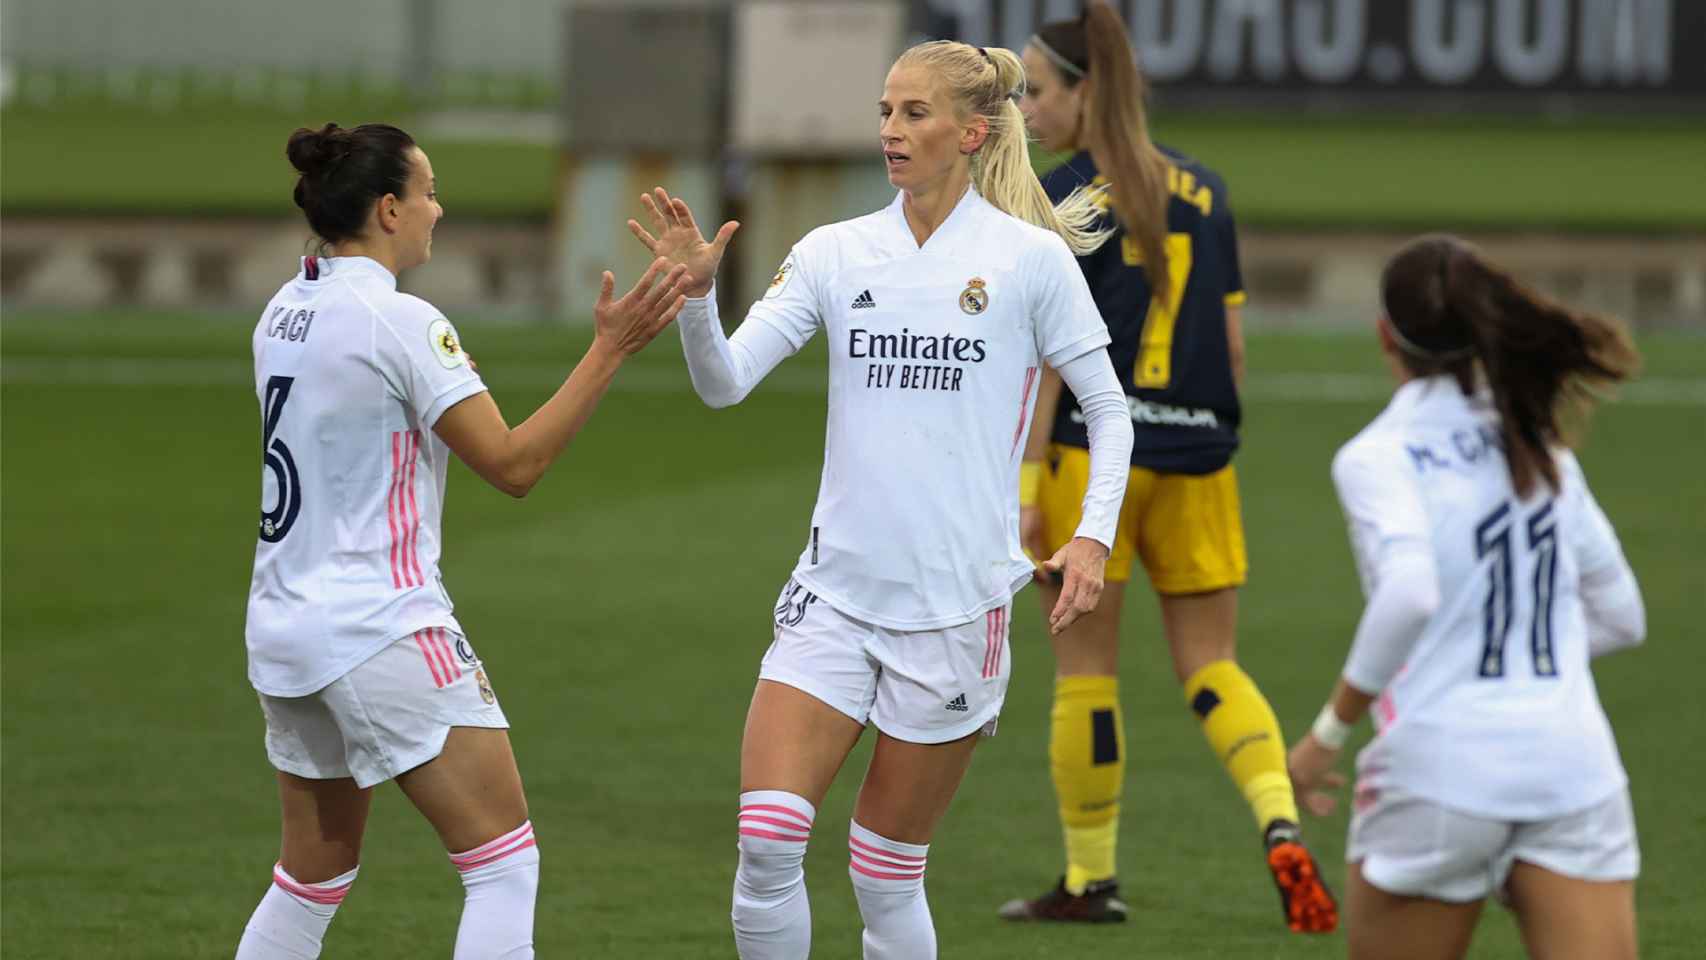 Sofia Jakobsson celebra su gol con el Real Madrid Femenino frente al Deportivo Abanca junto a Aurelie Kaci y Marta Cardona